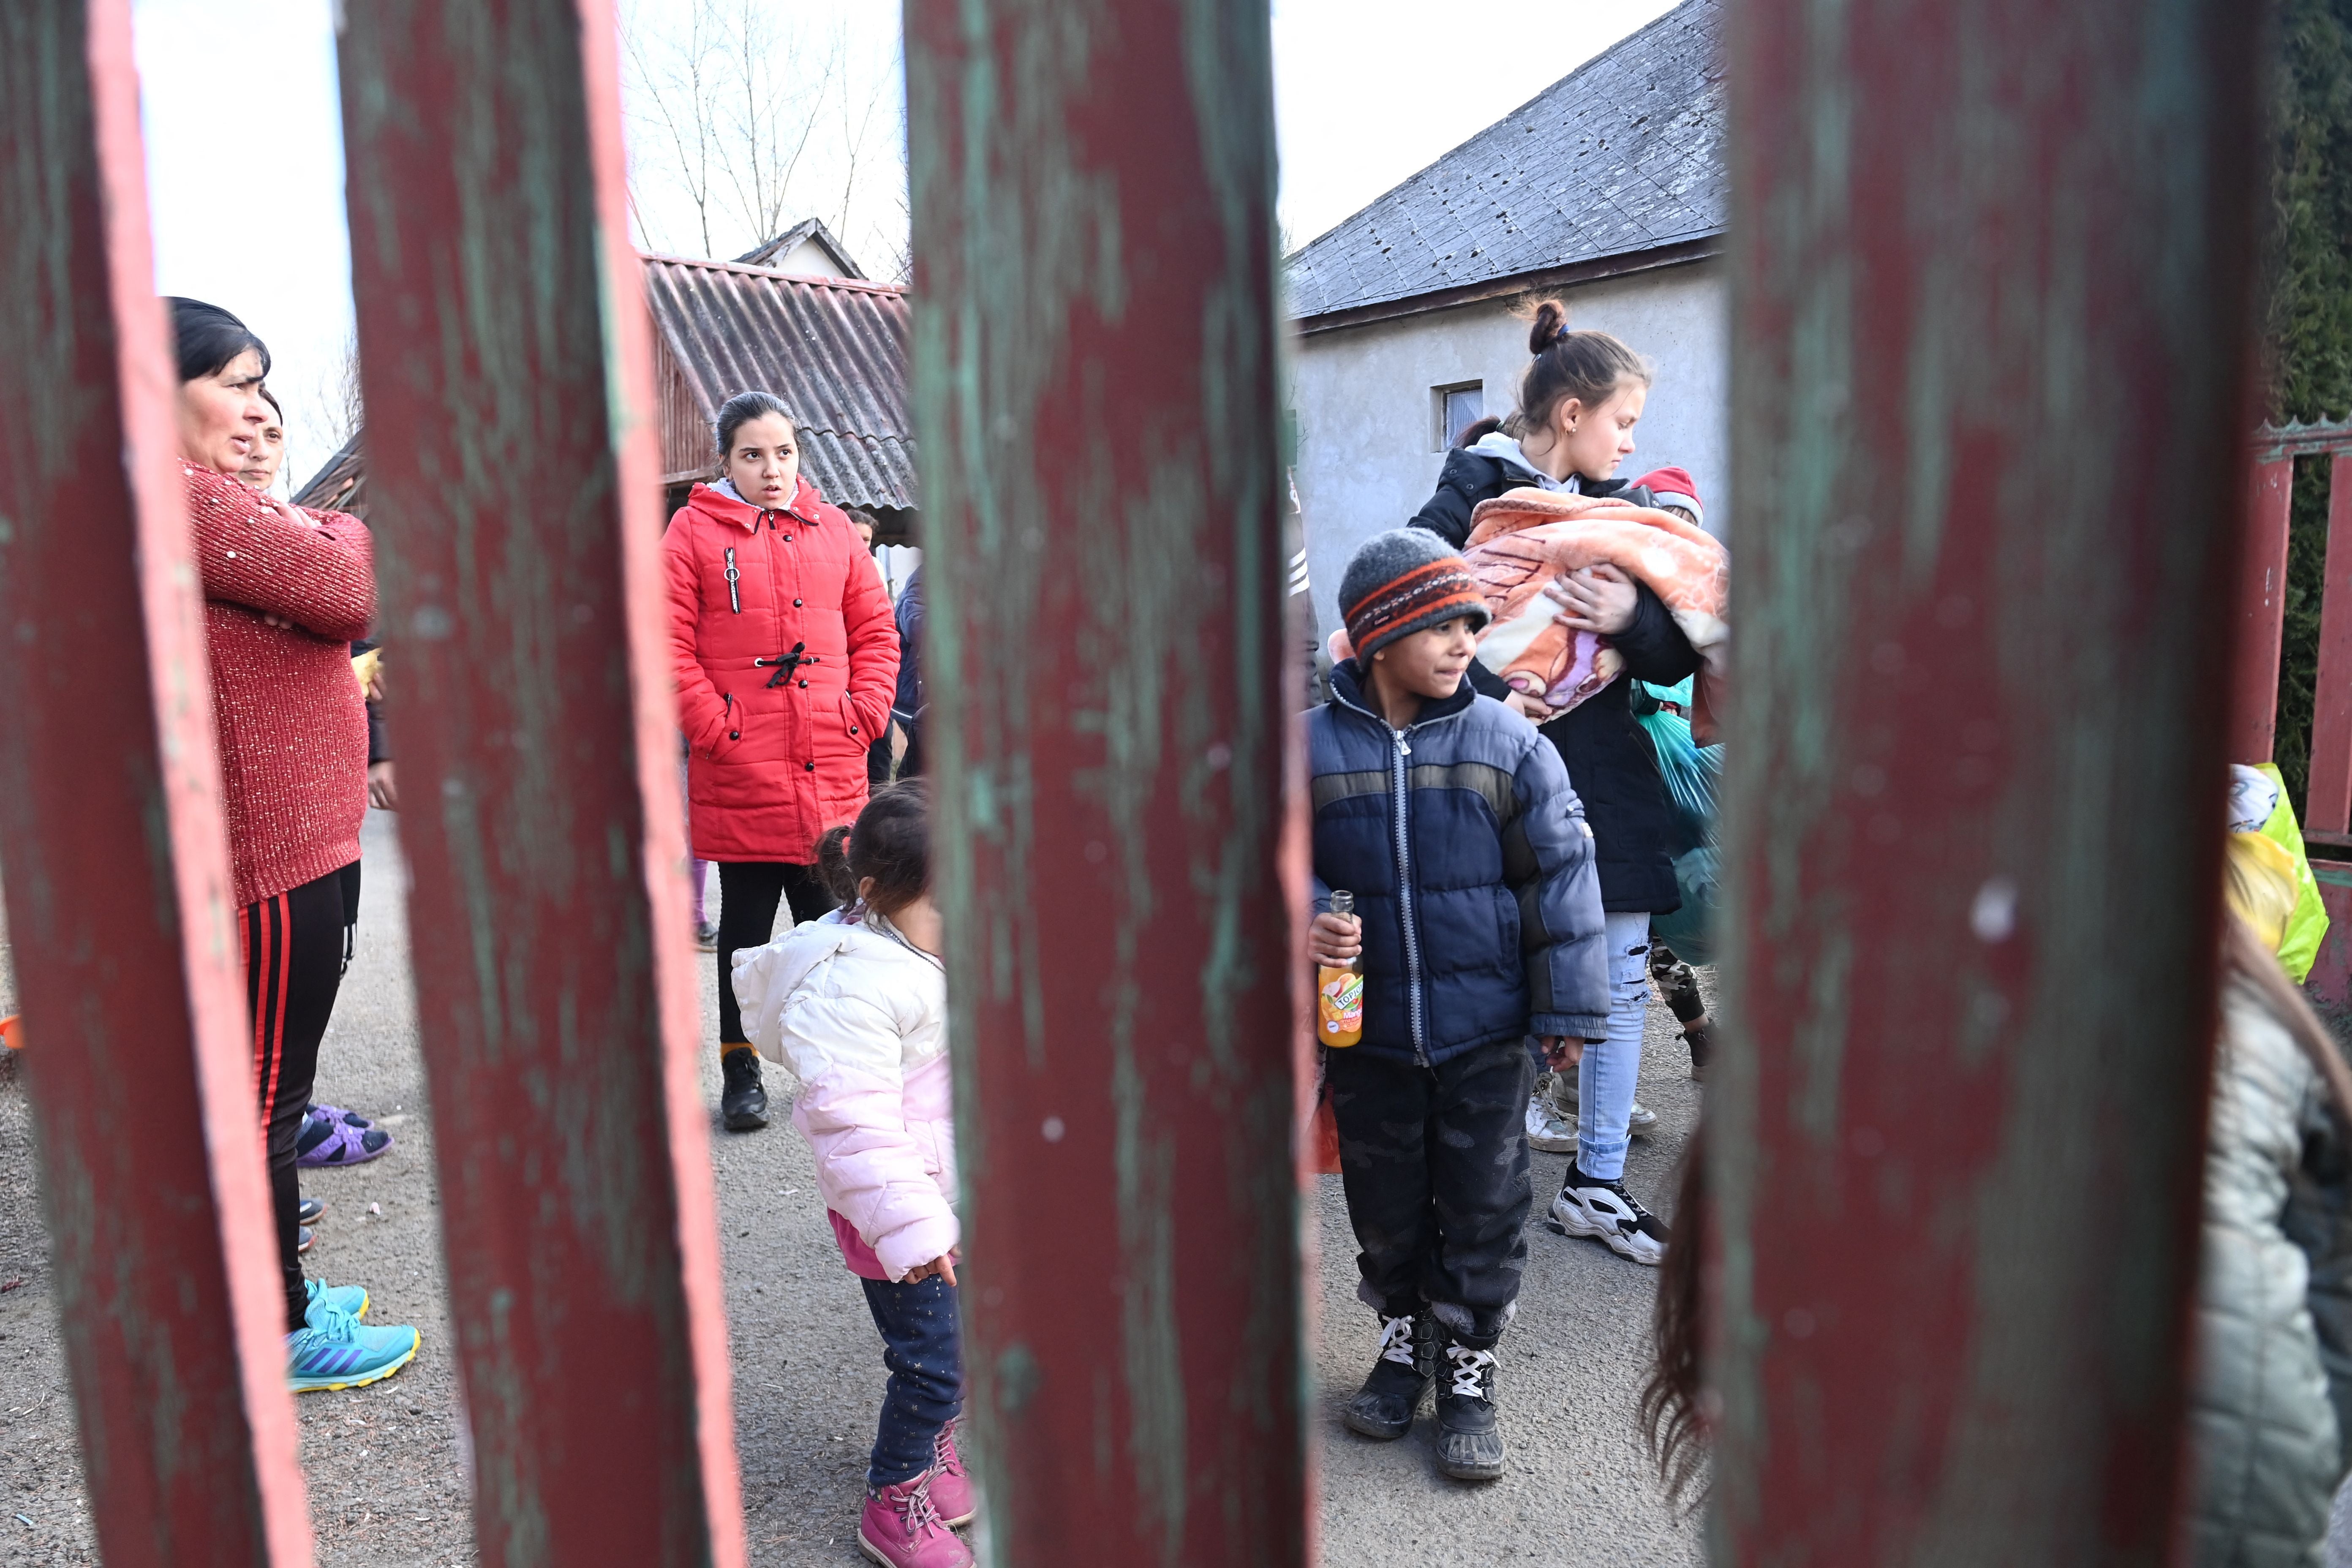 Romani people fleeing Ukraine arrive in Tiszabecs, Hungary, in late February